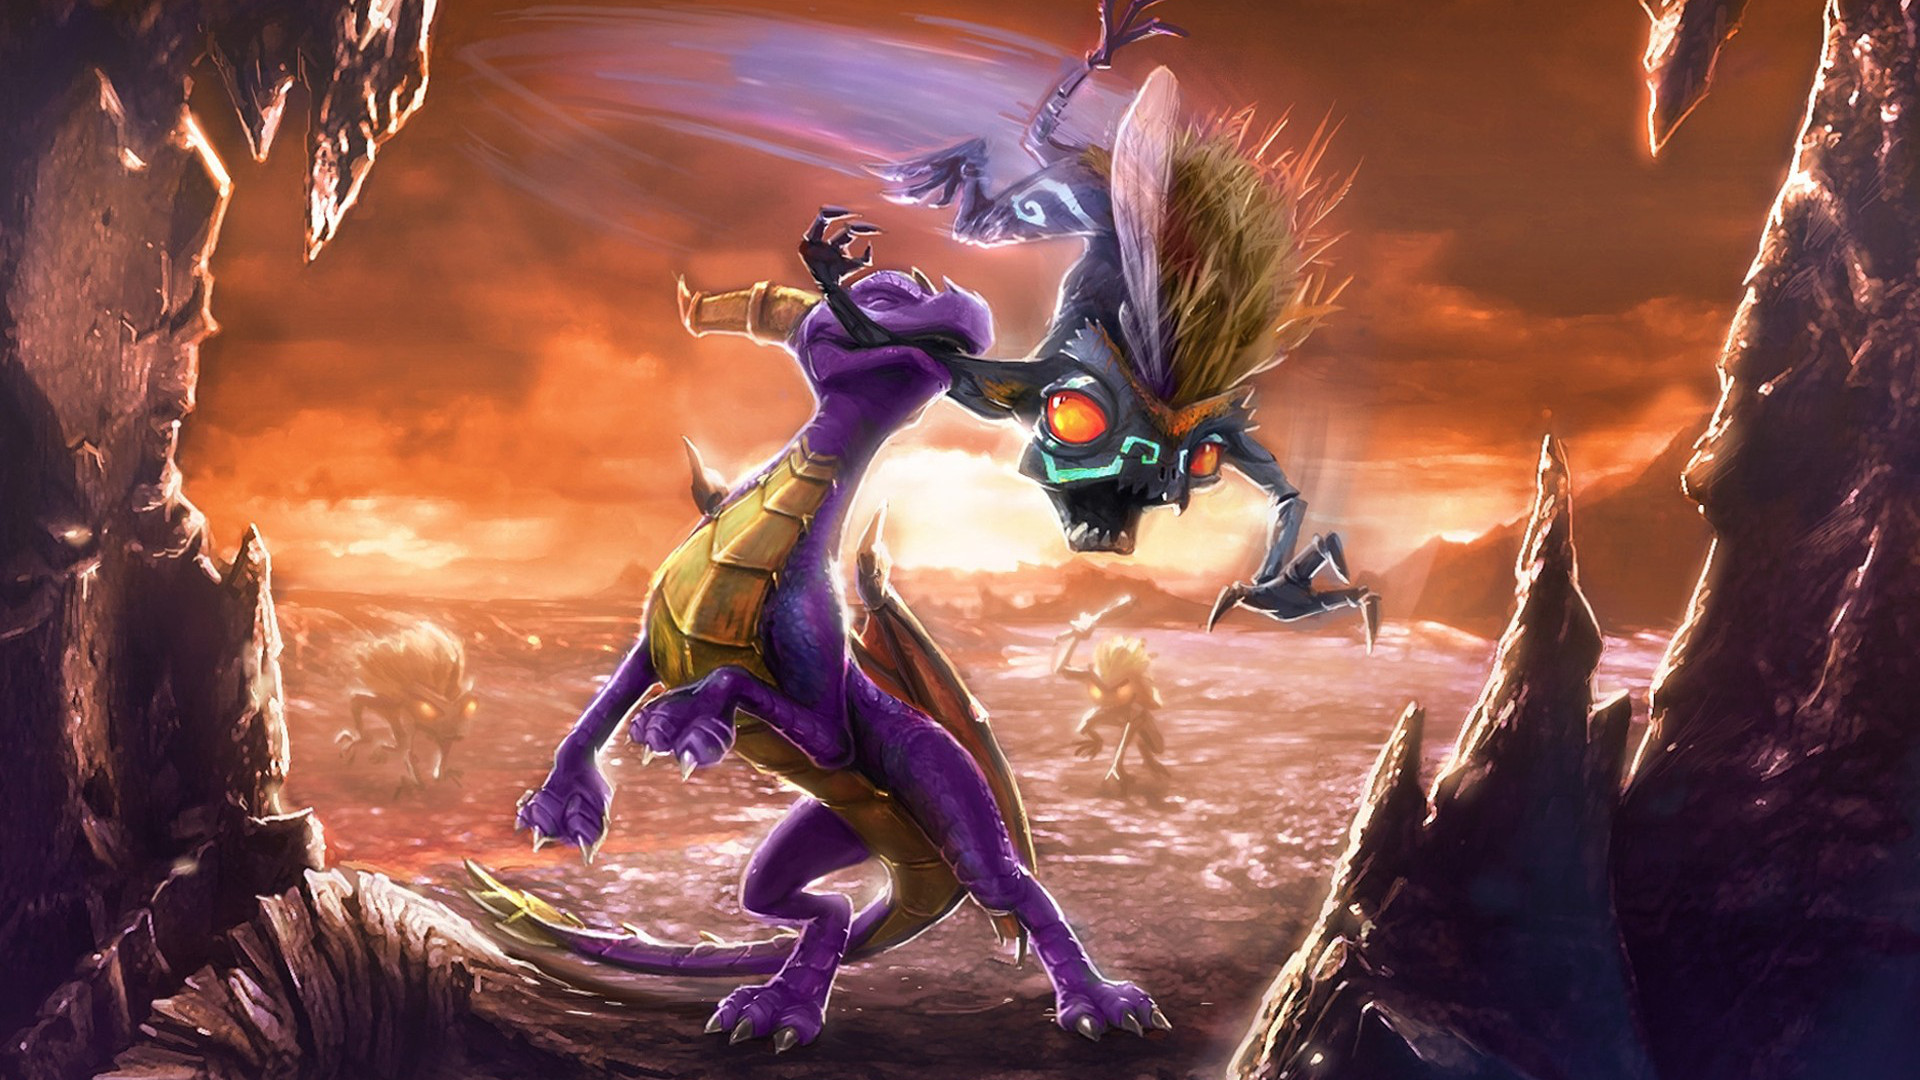 Spyro the Dragon Art